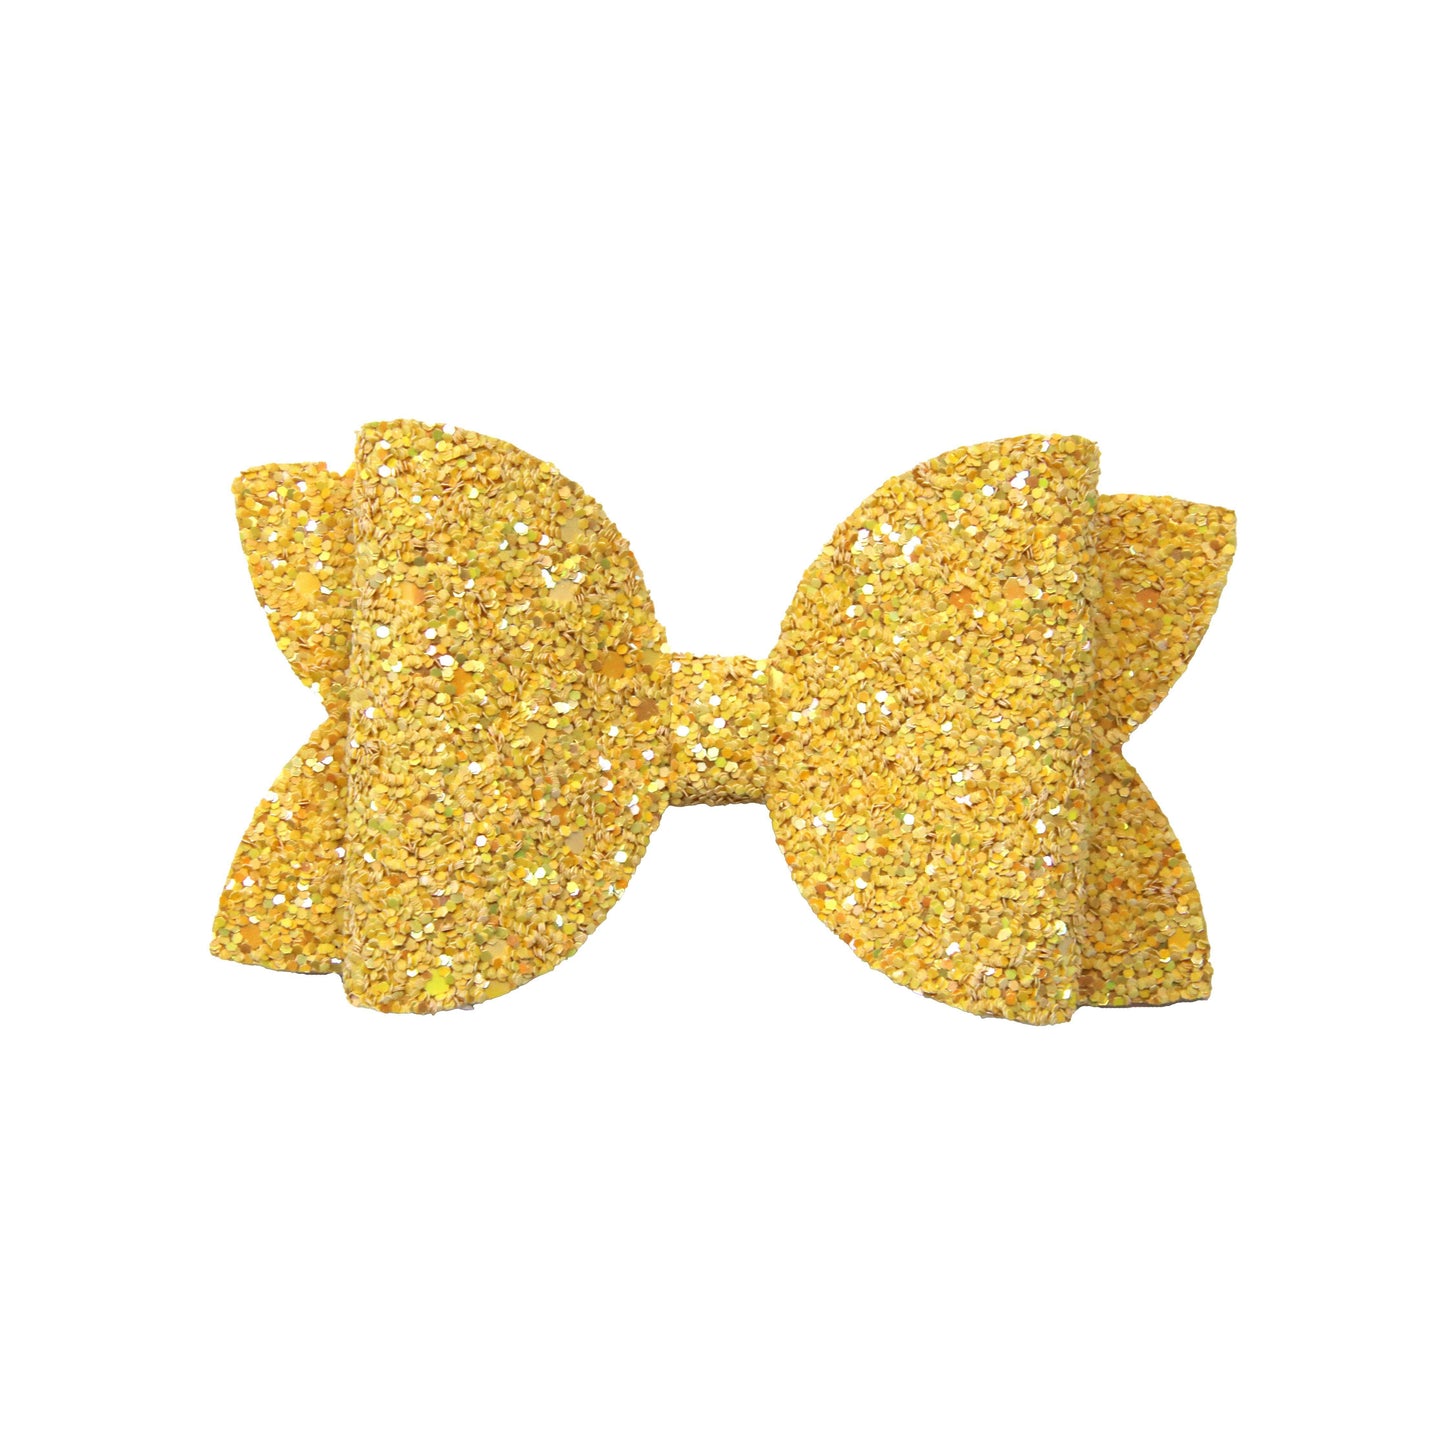 4 inch Yellow Glitter Diva Bow